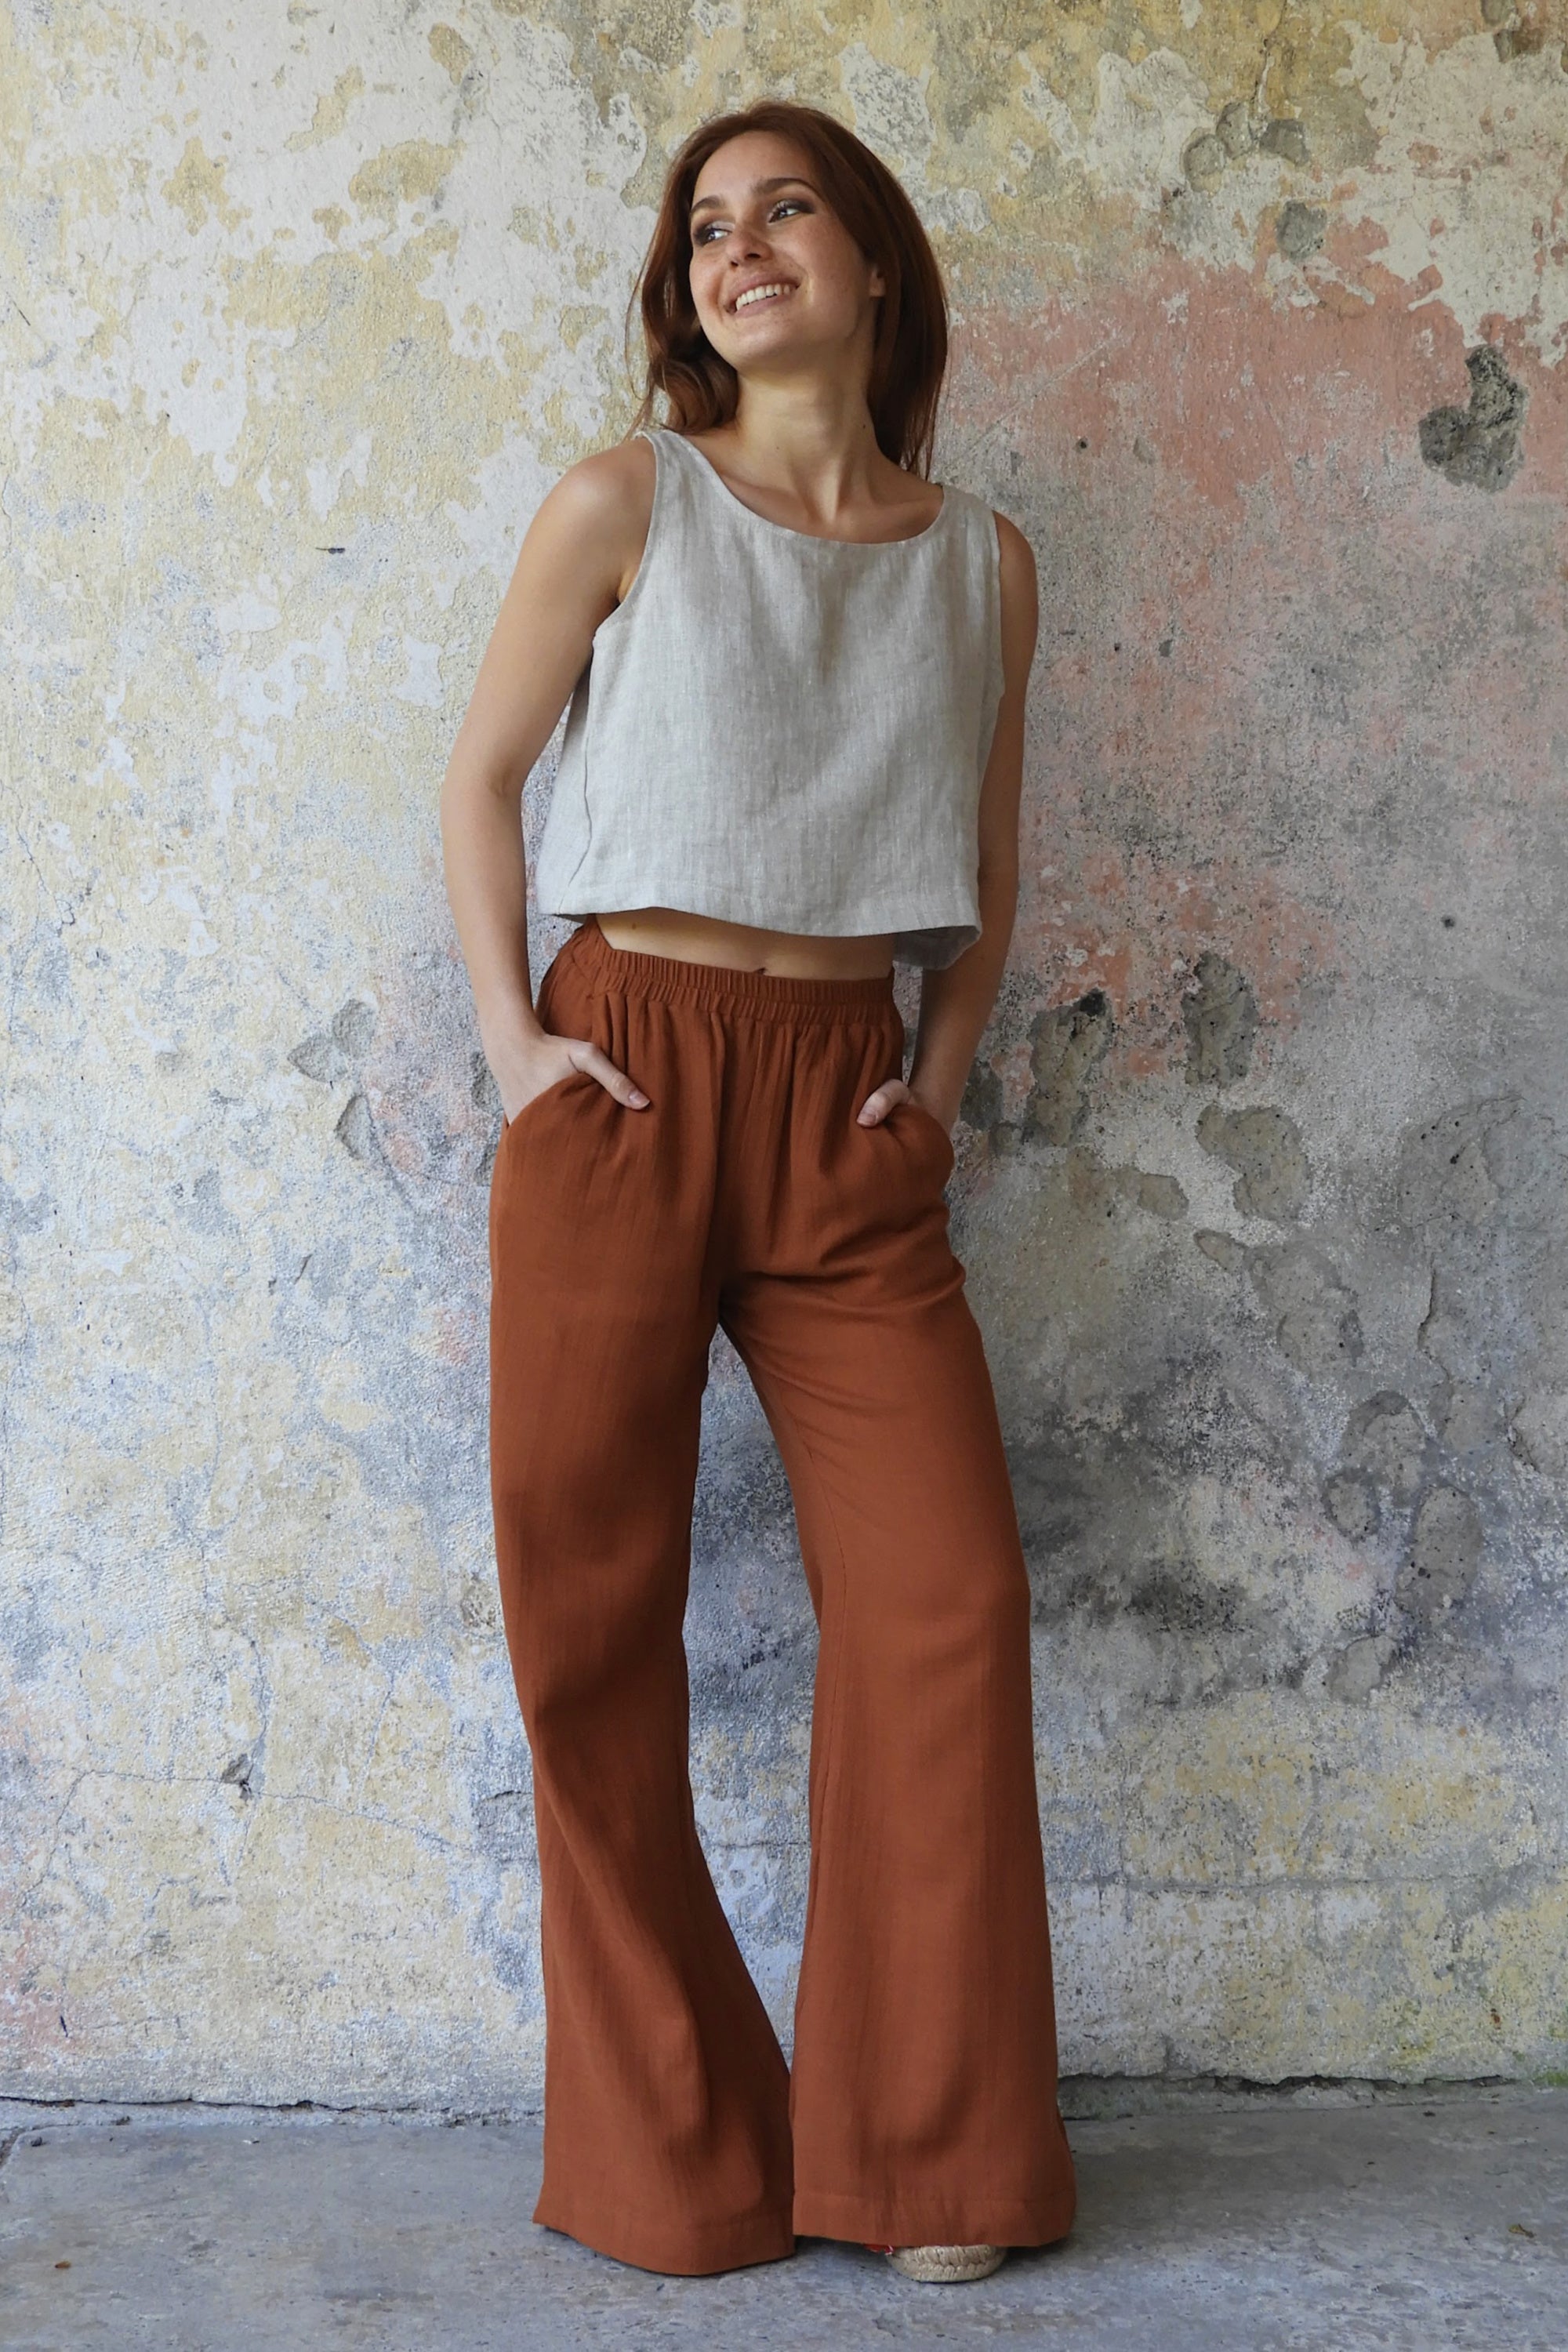 Odana's | PALAZZO Women's 2Layer Gauze Cotton Pants (Green, Terra Cotta, Mustard, Brown) | Palazzo Pants | Sustainable Fashion